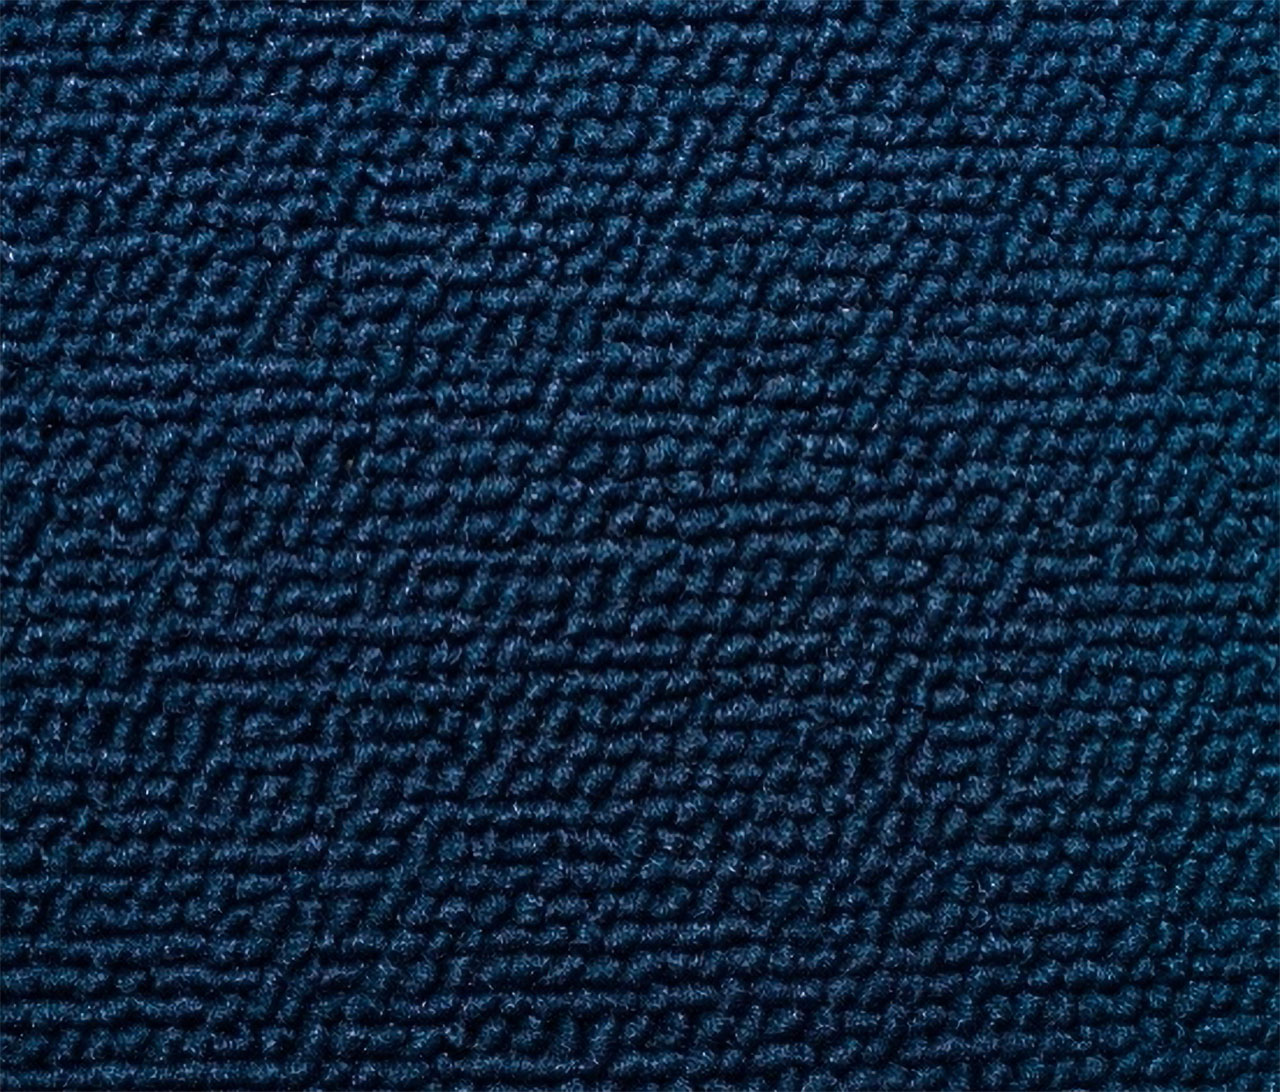 Valiant SV-1 Valiant Sedan Blue Antique & Regal Blue Carpet (Image 1 of 1)